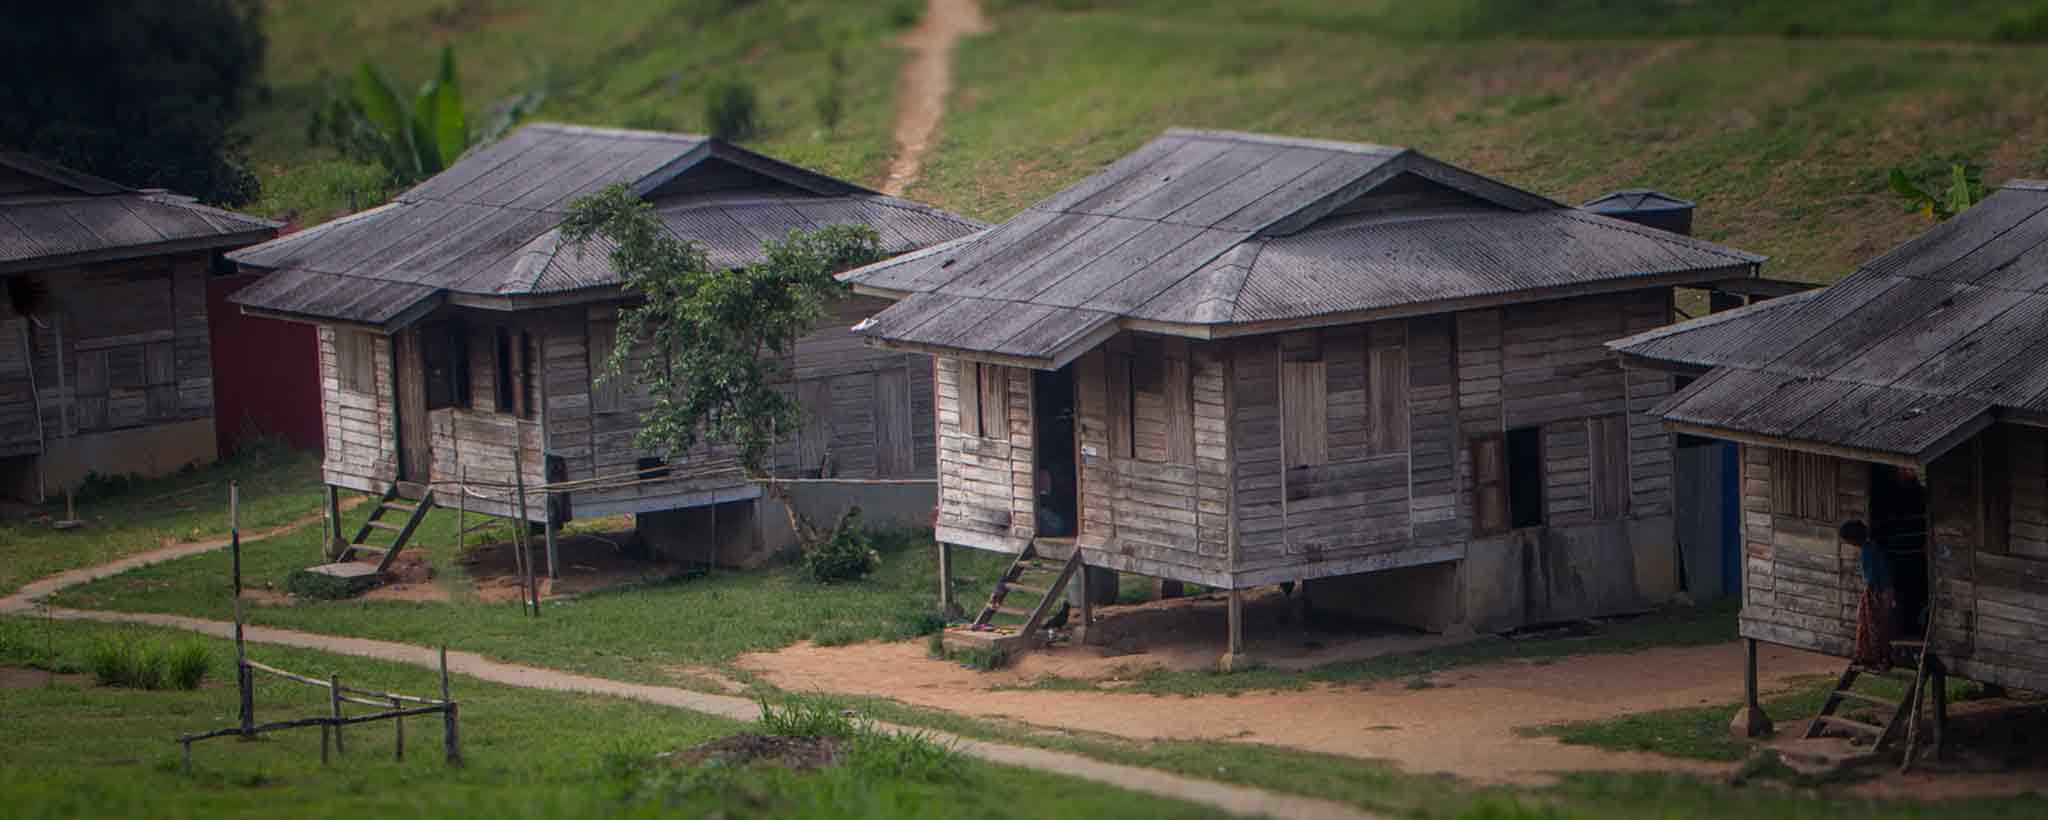 'Wooden huts'